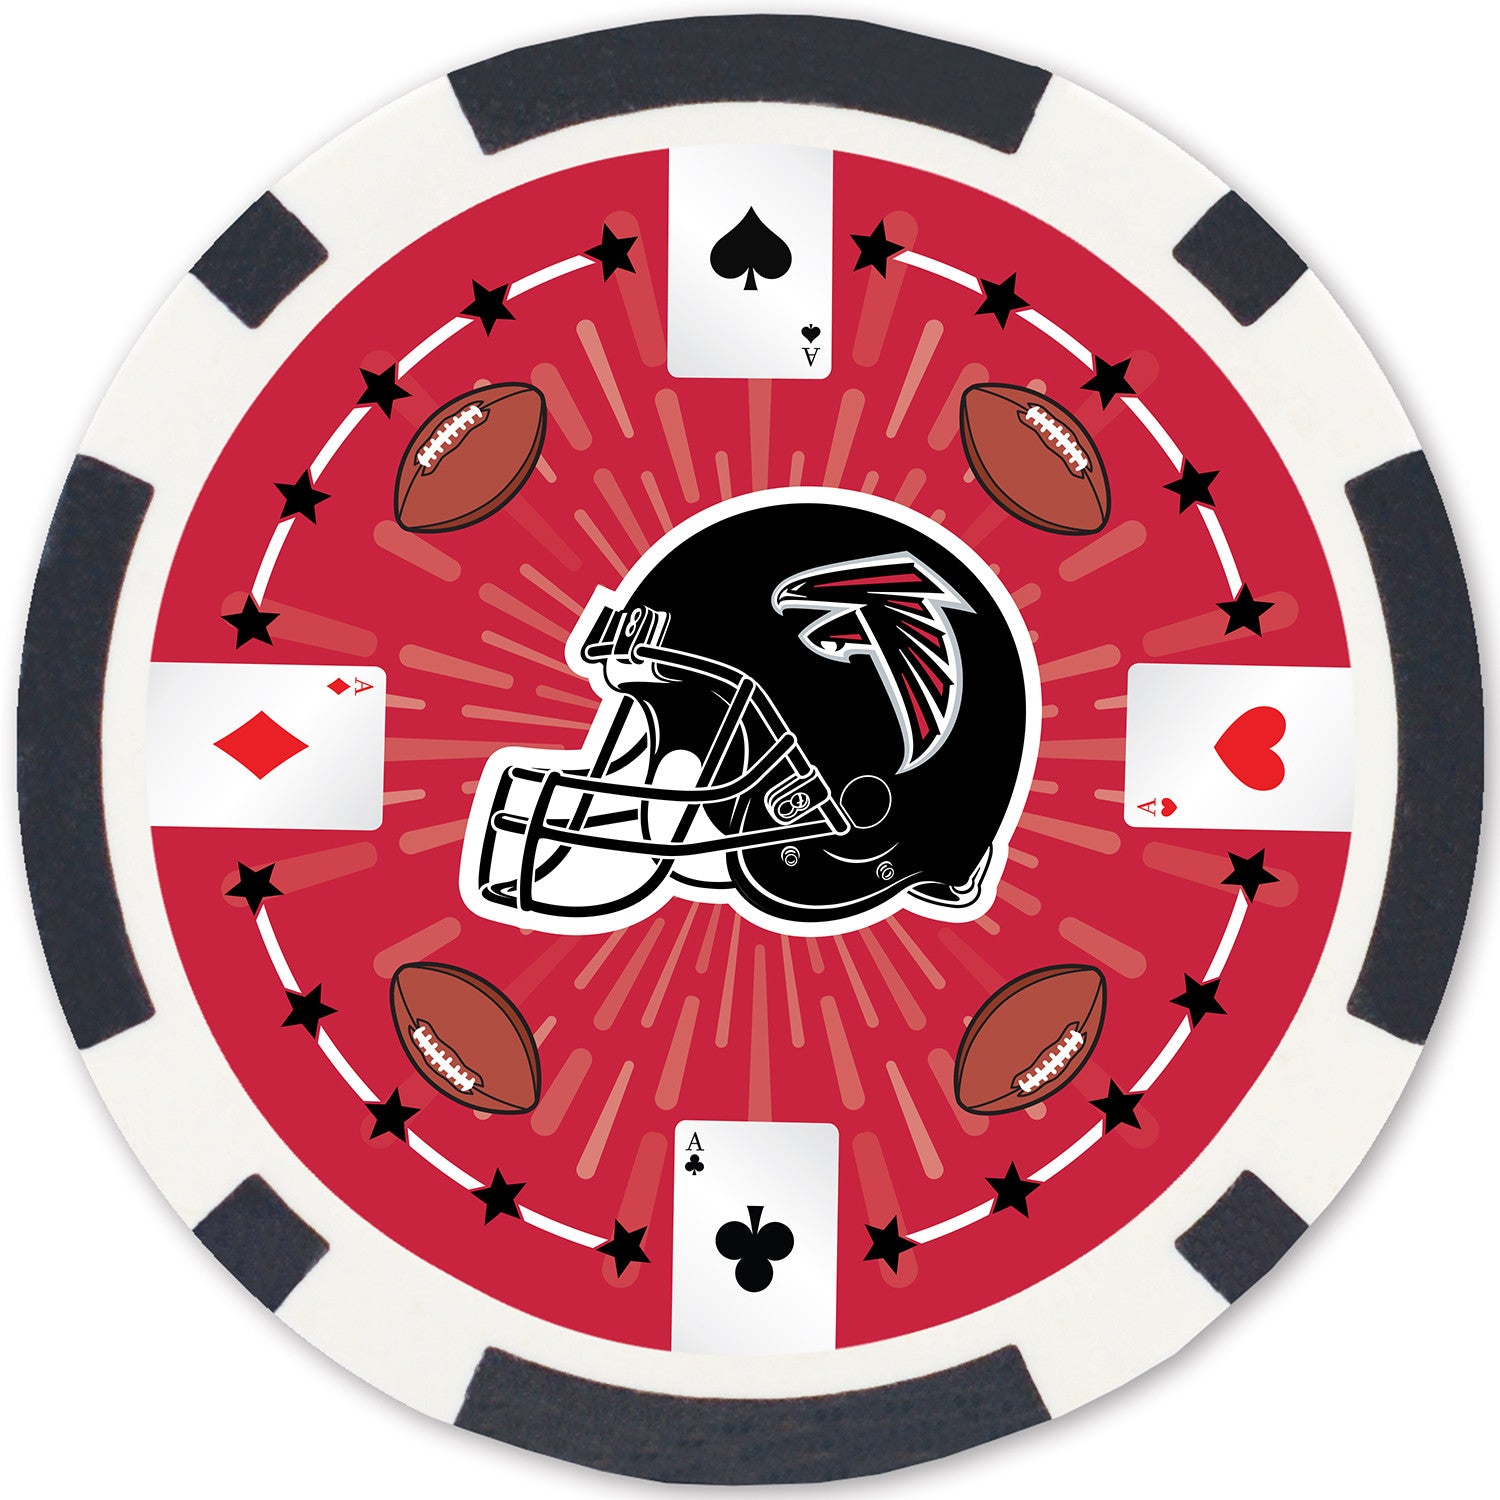 Atlanta Falcons Casino Style 100 Piece Poker Set